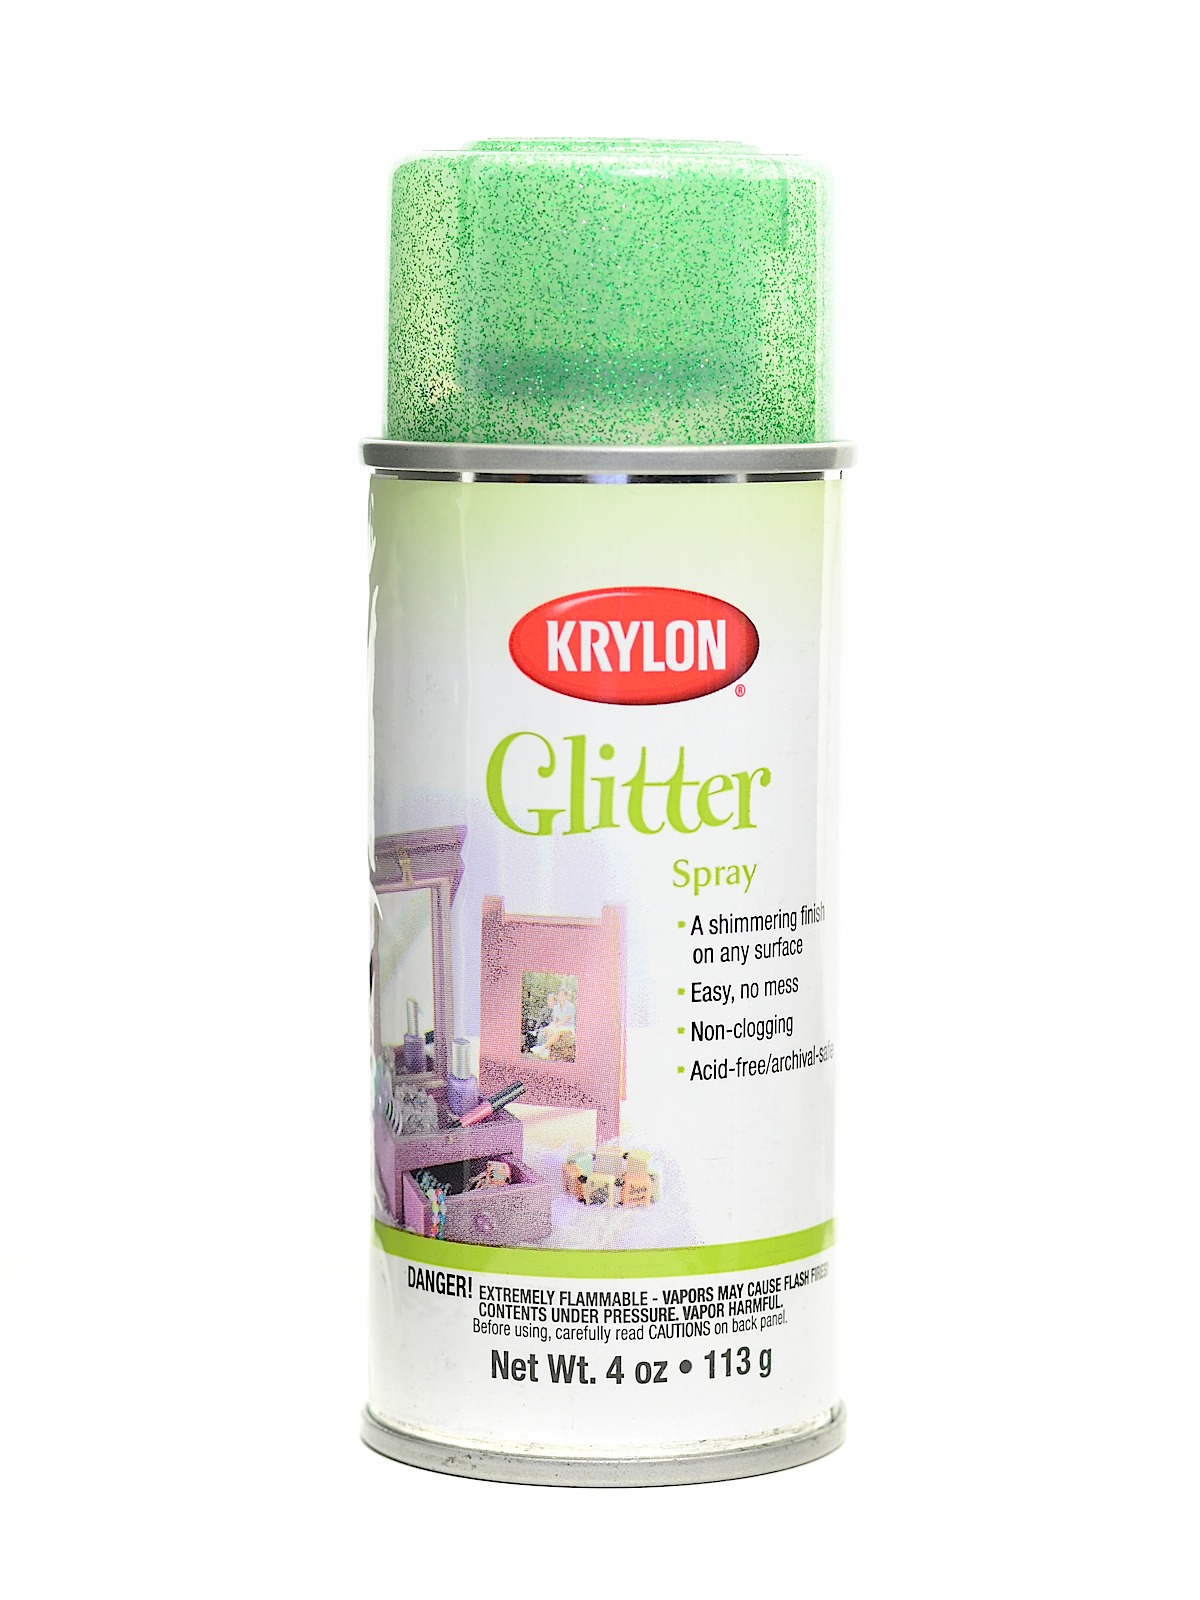 Glitter Spray Glamorous Green